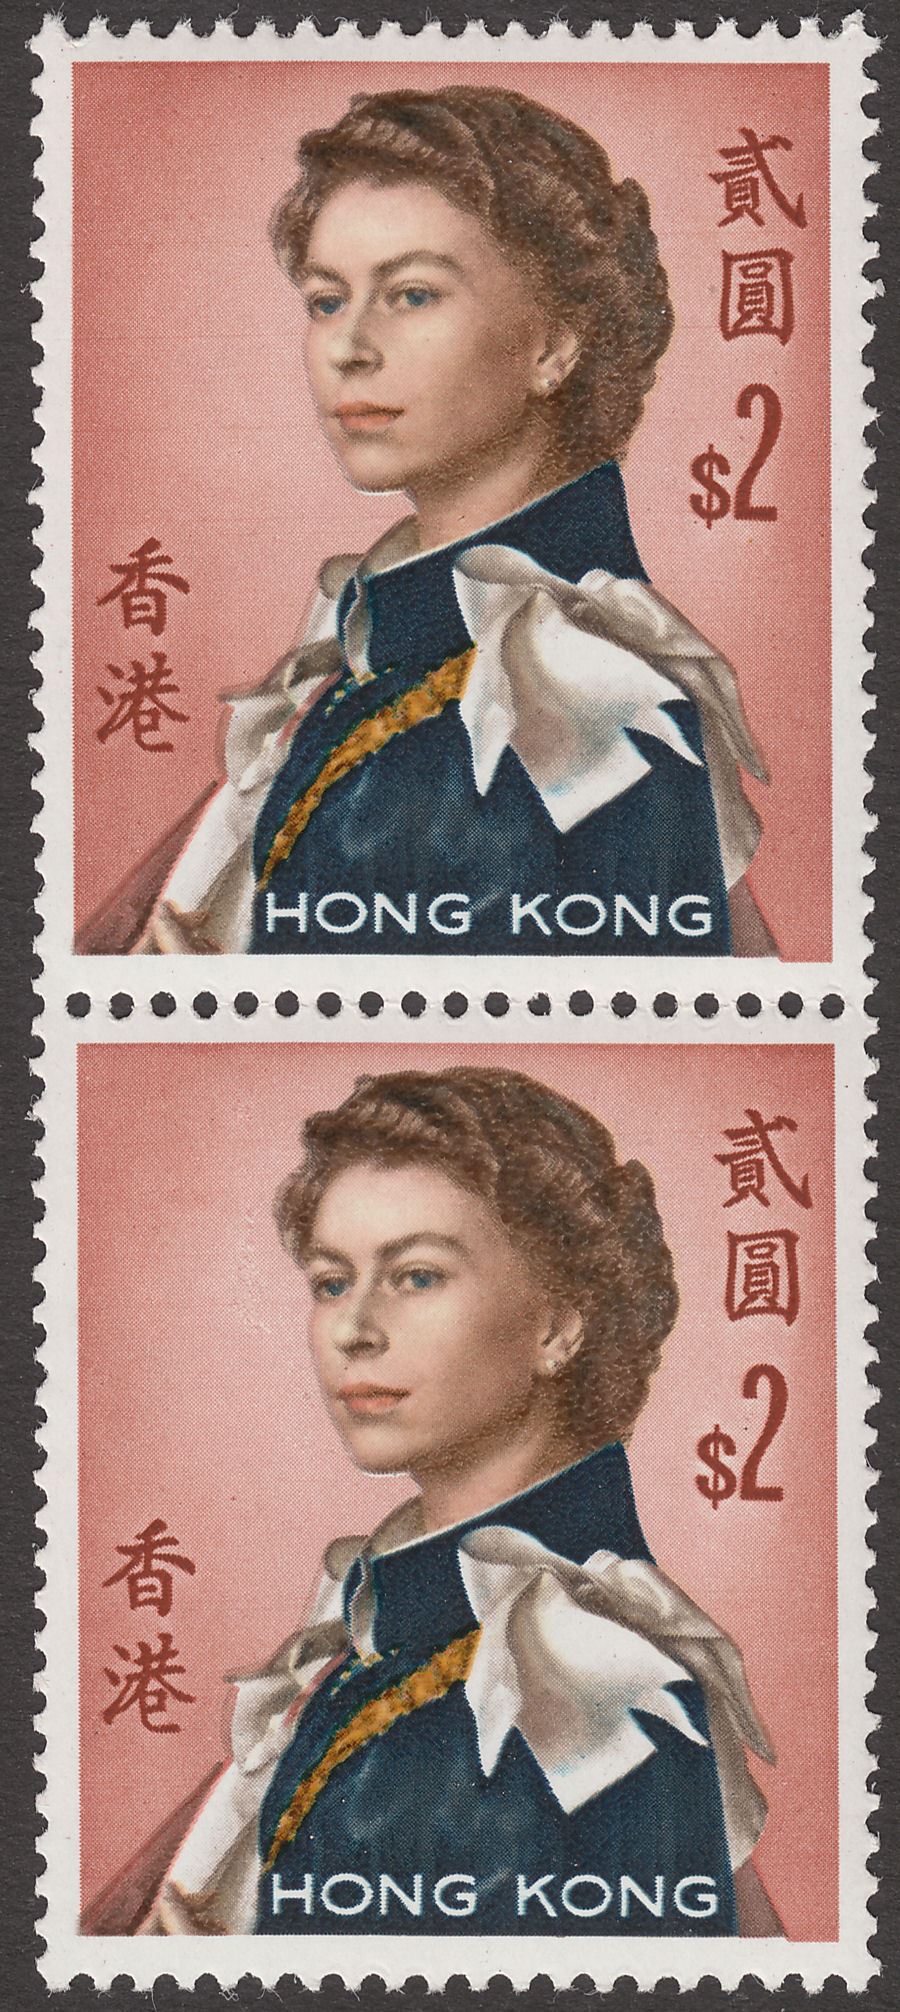 Hong Kong 1962 Queen Elizabeth II $2 Pair Mint wmk Inverted SG207dw